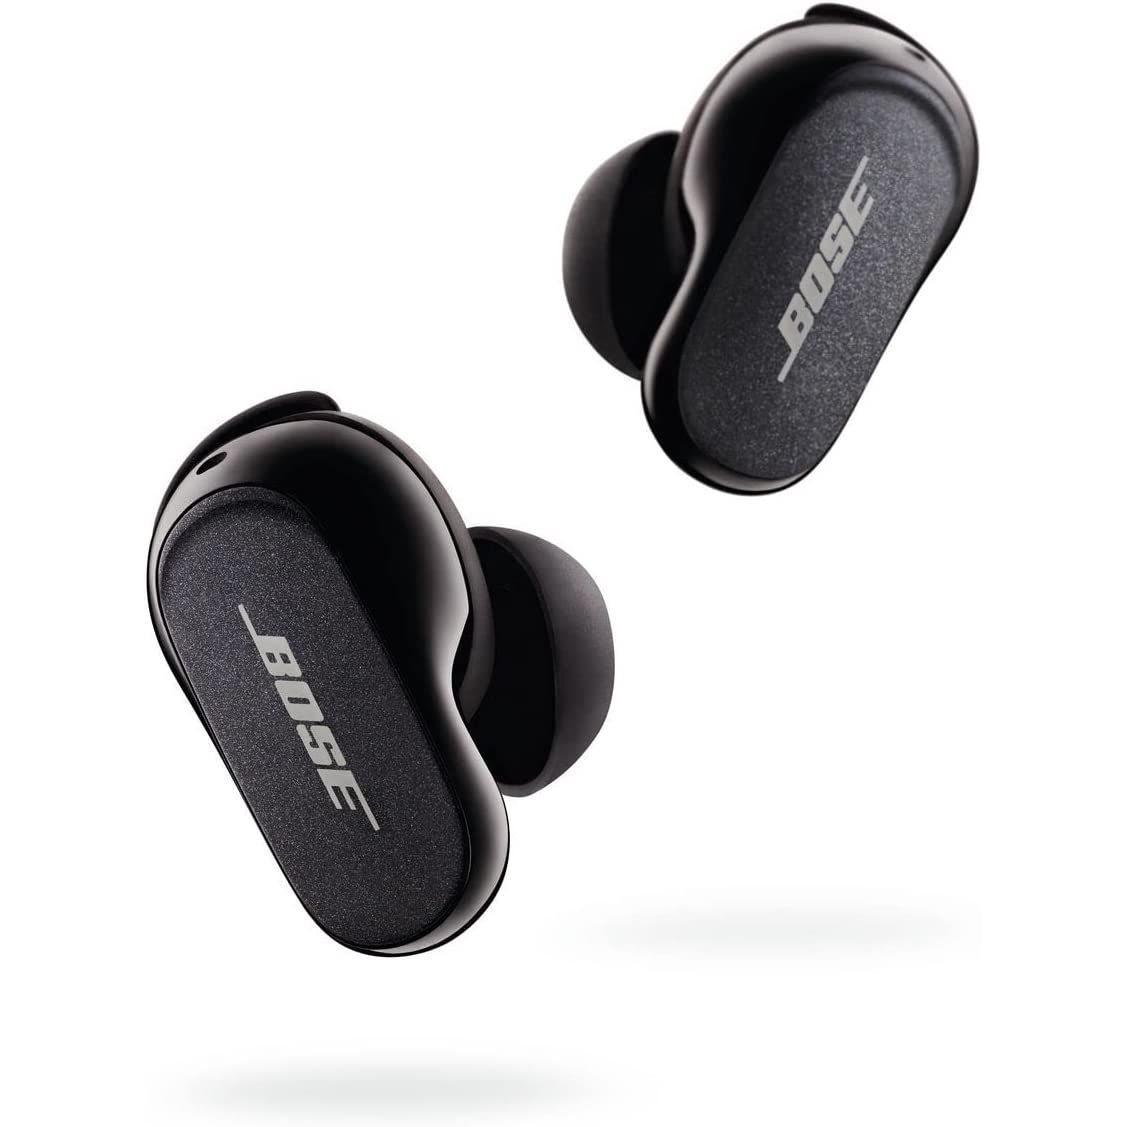 Bose QuietComfort II truly wireless earbuds